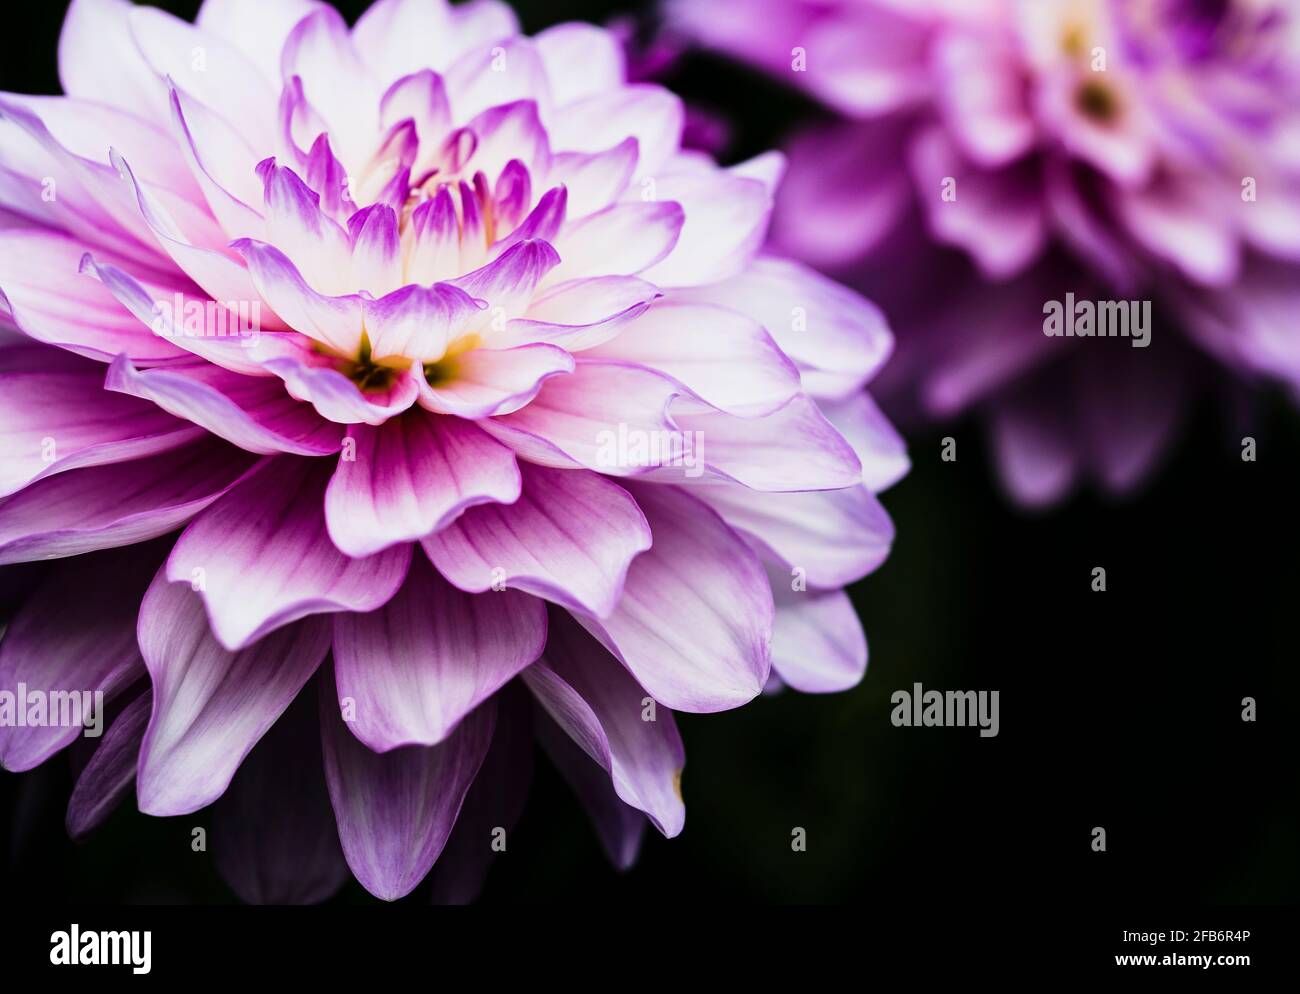 Dahlia, Close -up of Lilac & Cream coloured flower showing petals. Stock Photo